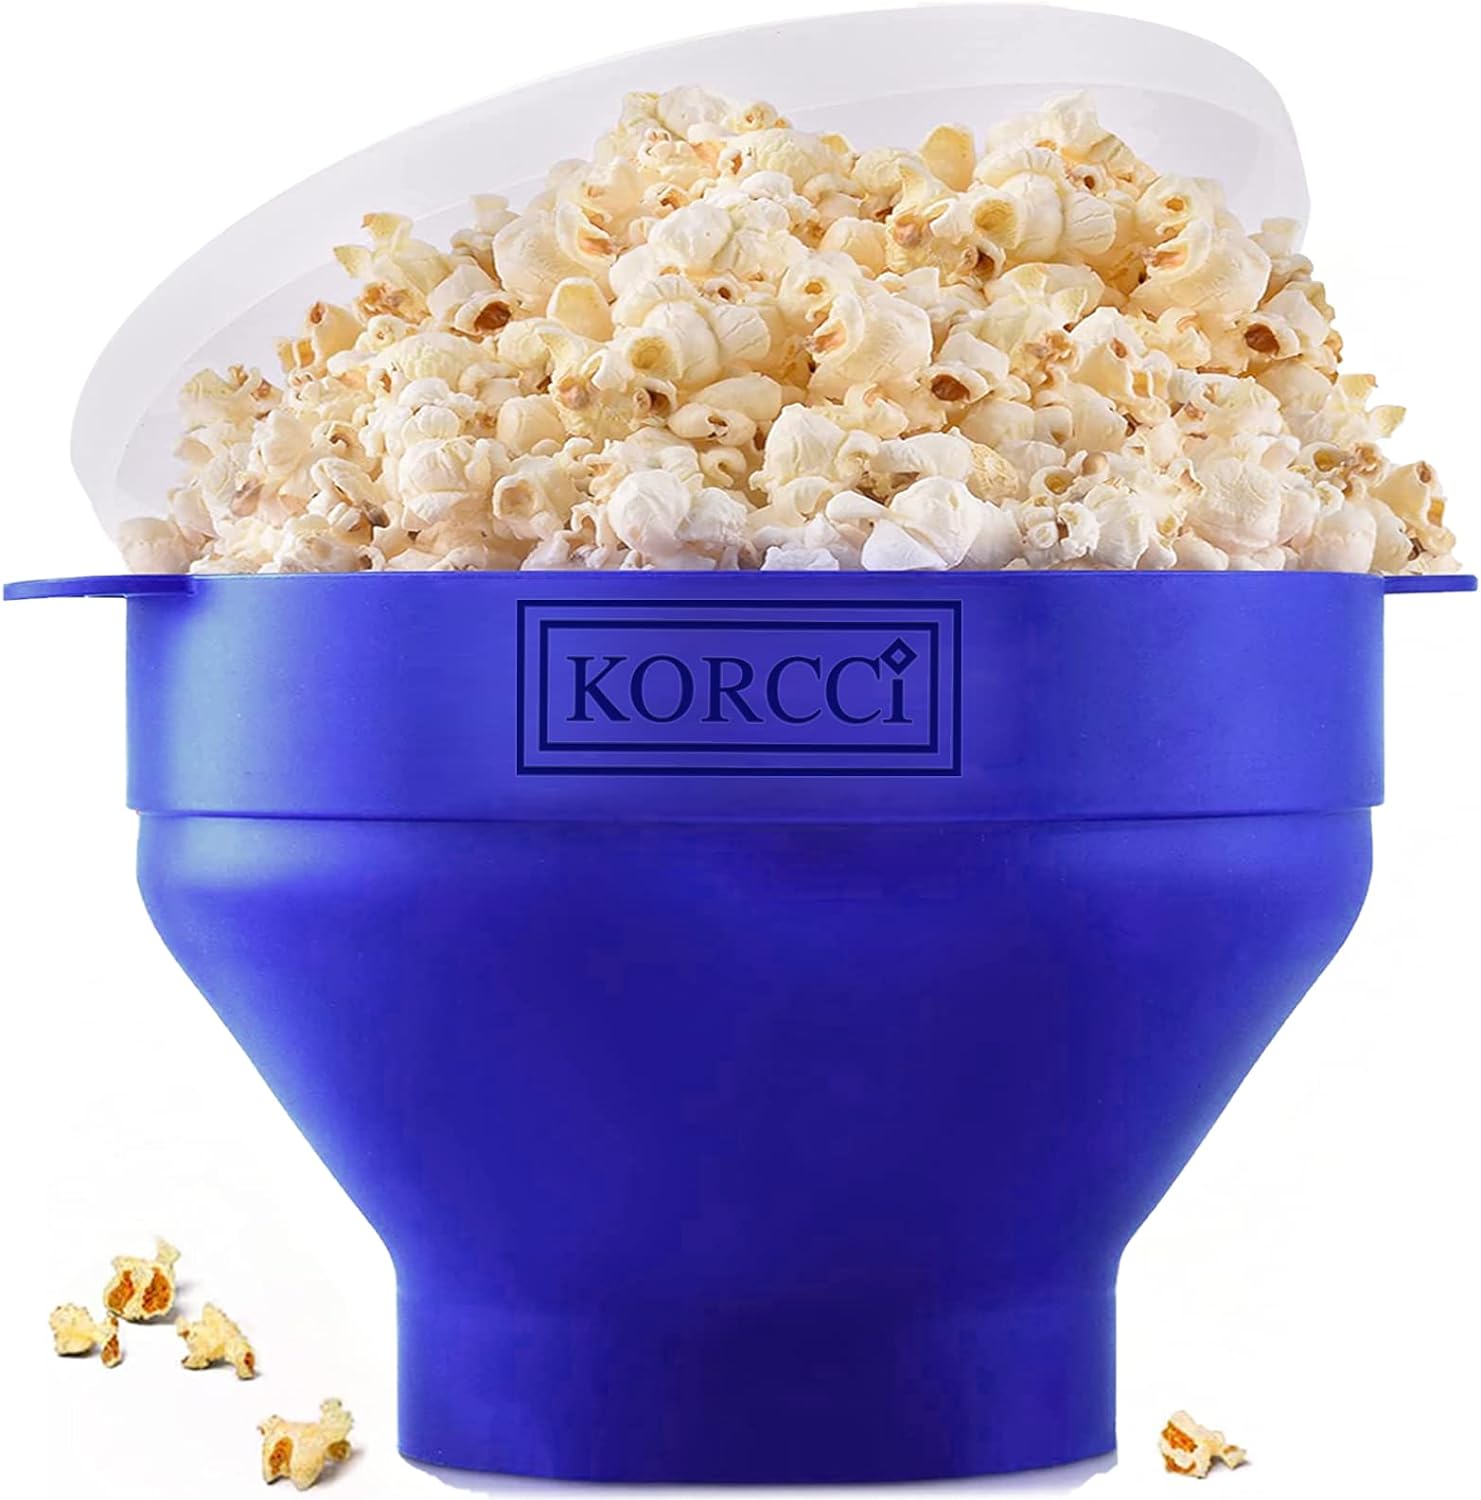 the original korcci microwaveable silicone popcorn popper